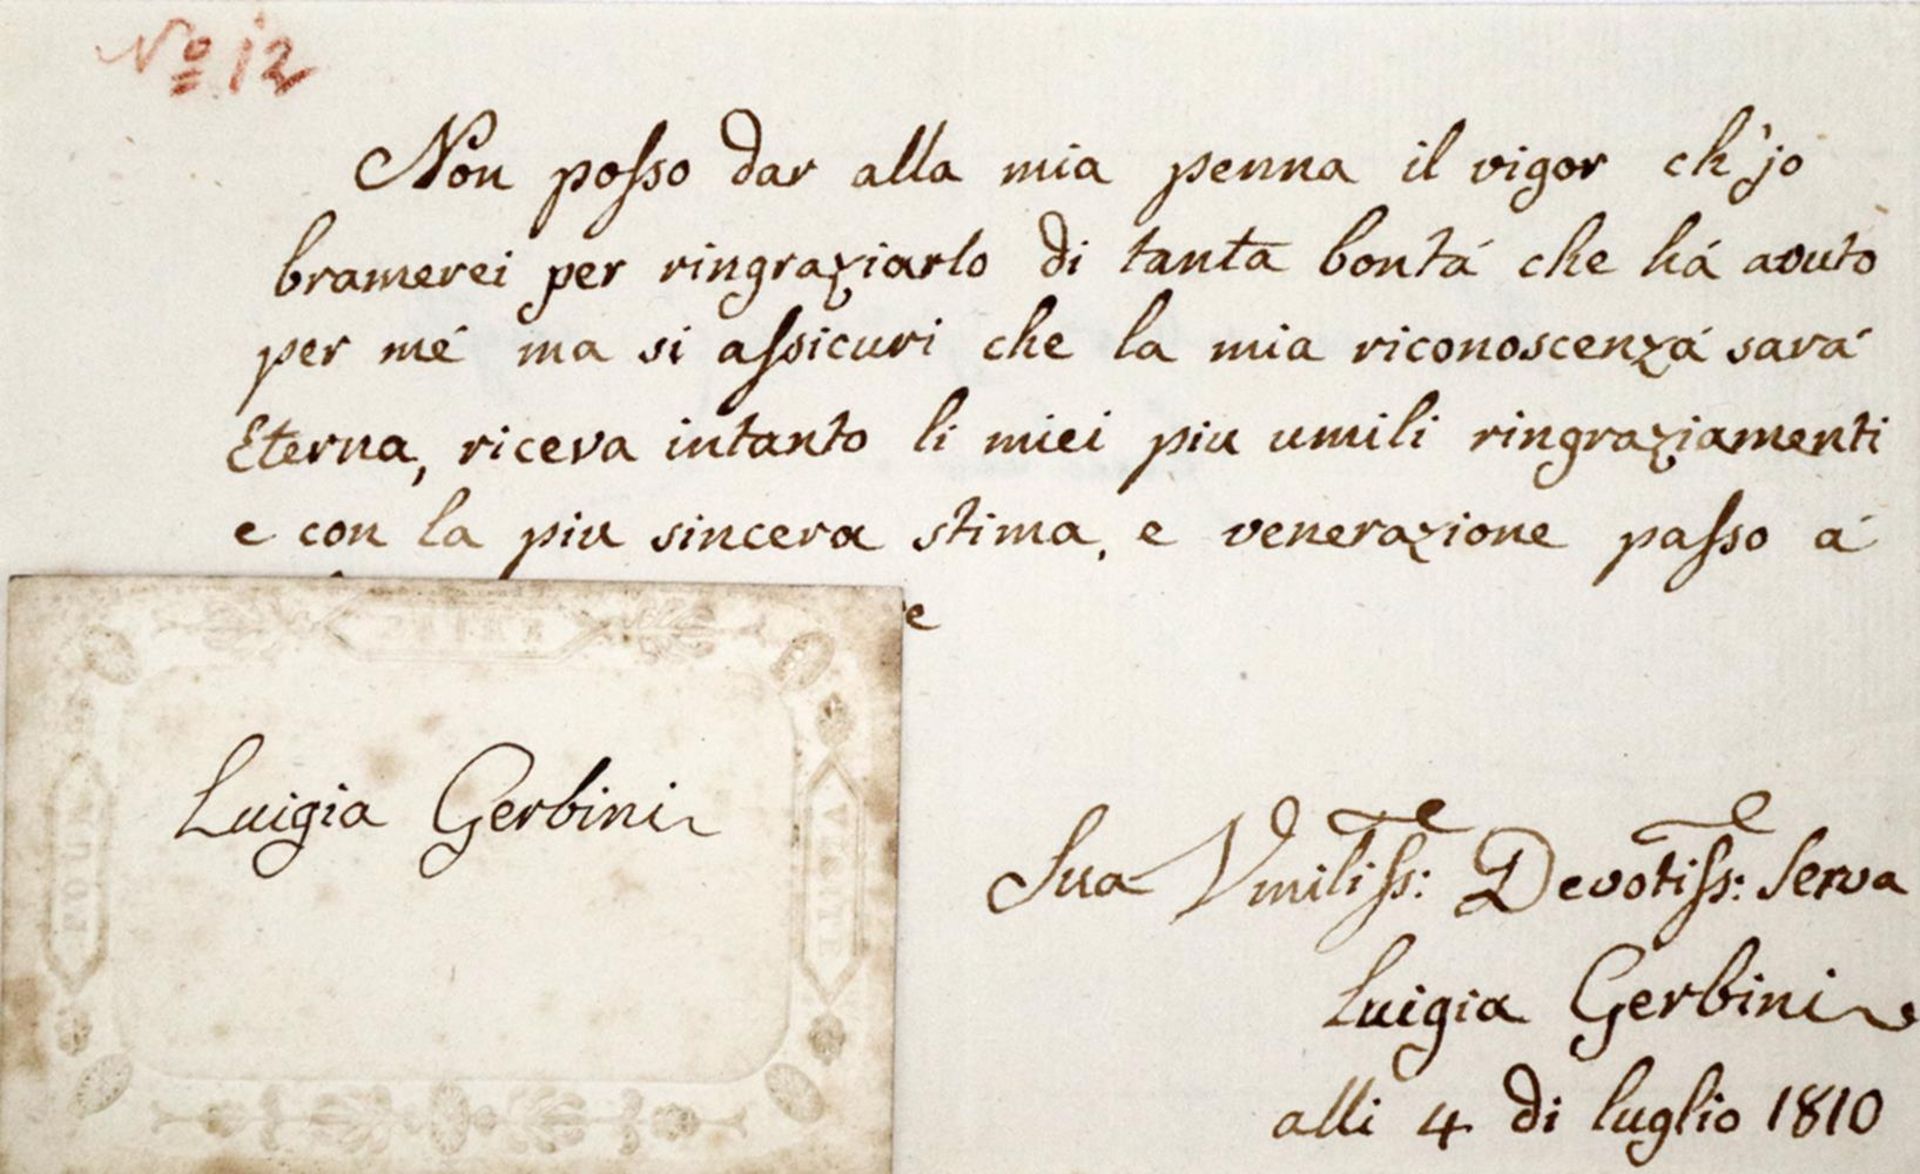 Gerbini, LuigiaGerbini, Luigia (1770 Turin - ?, Violinistin und Sängerin). Eh. Notiz vGerb